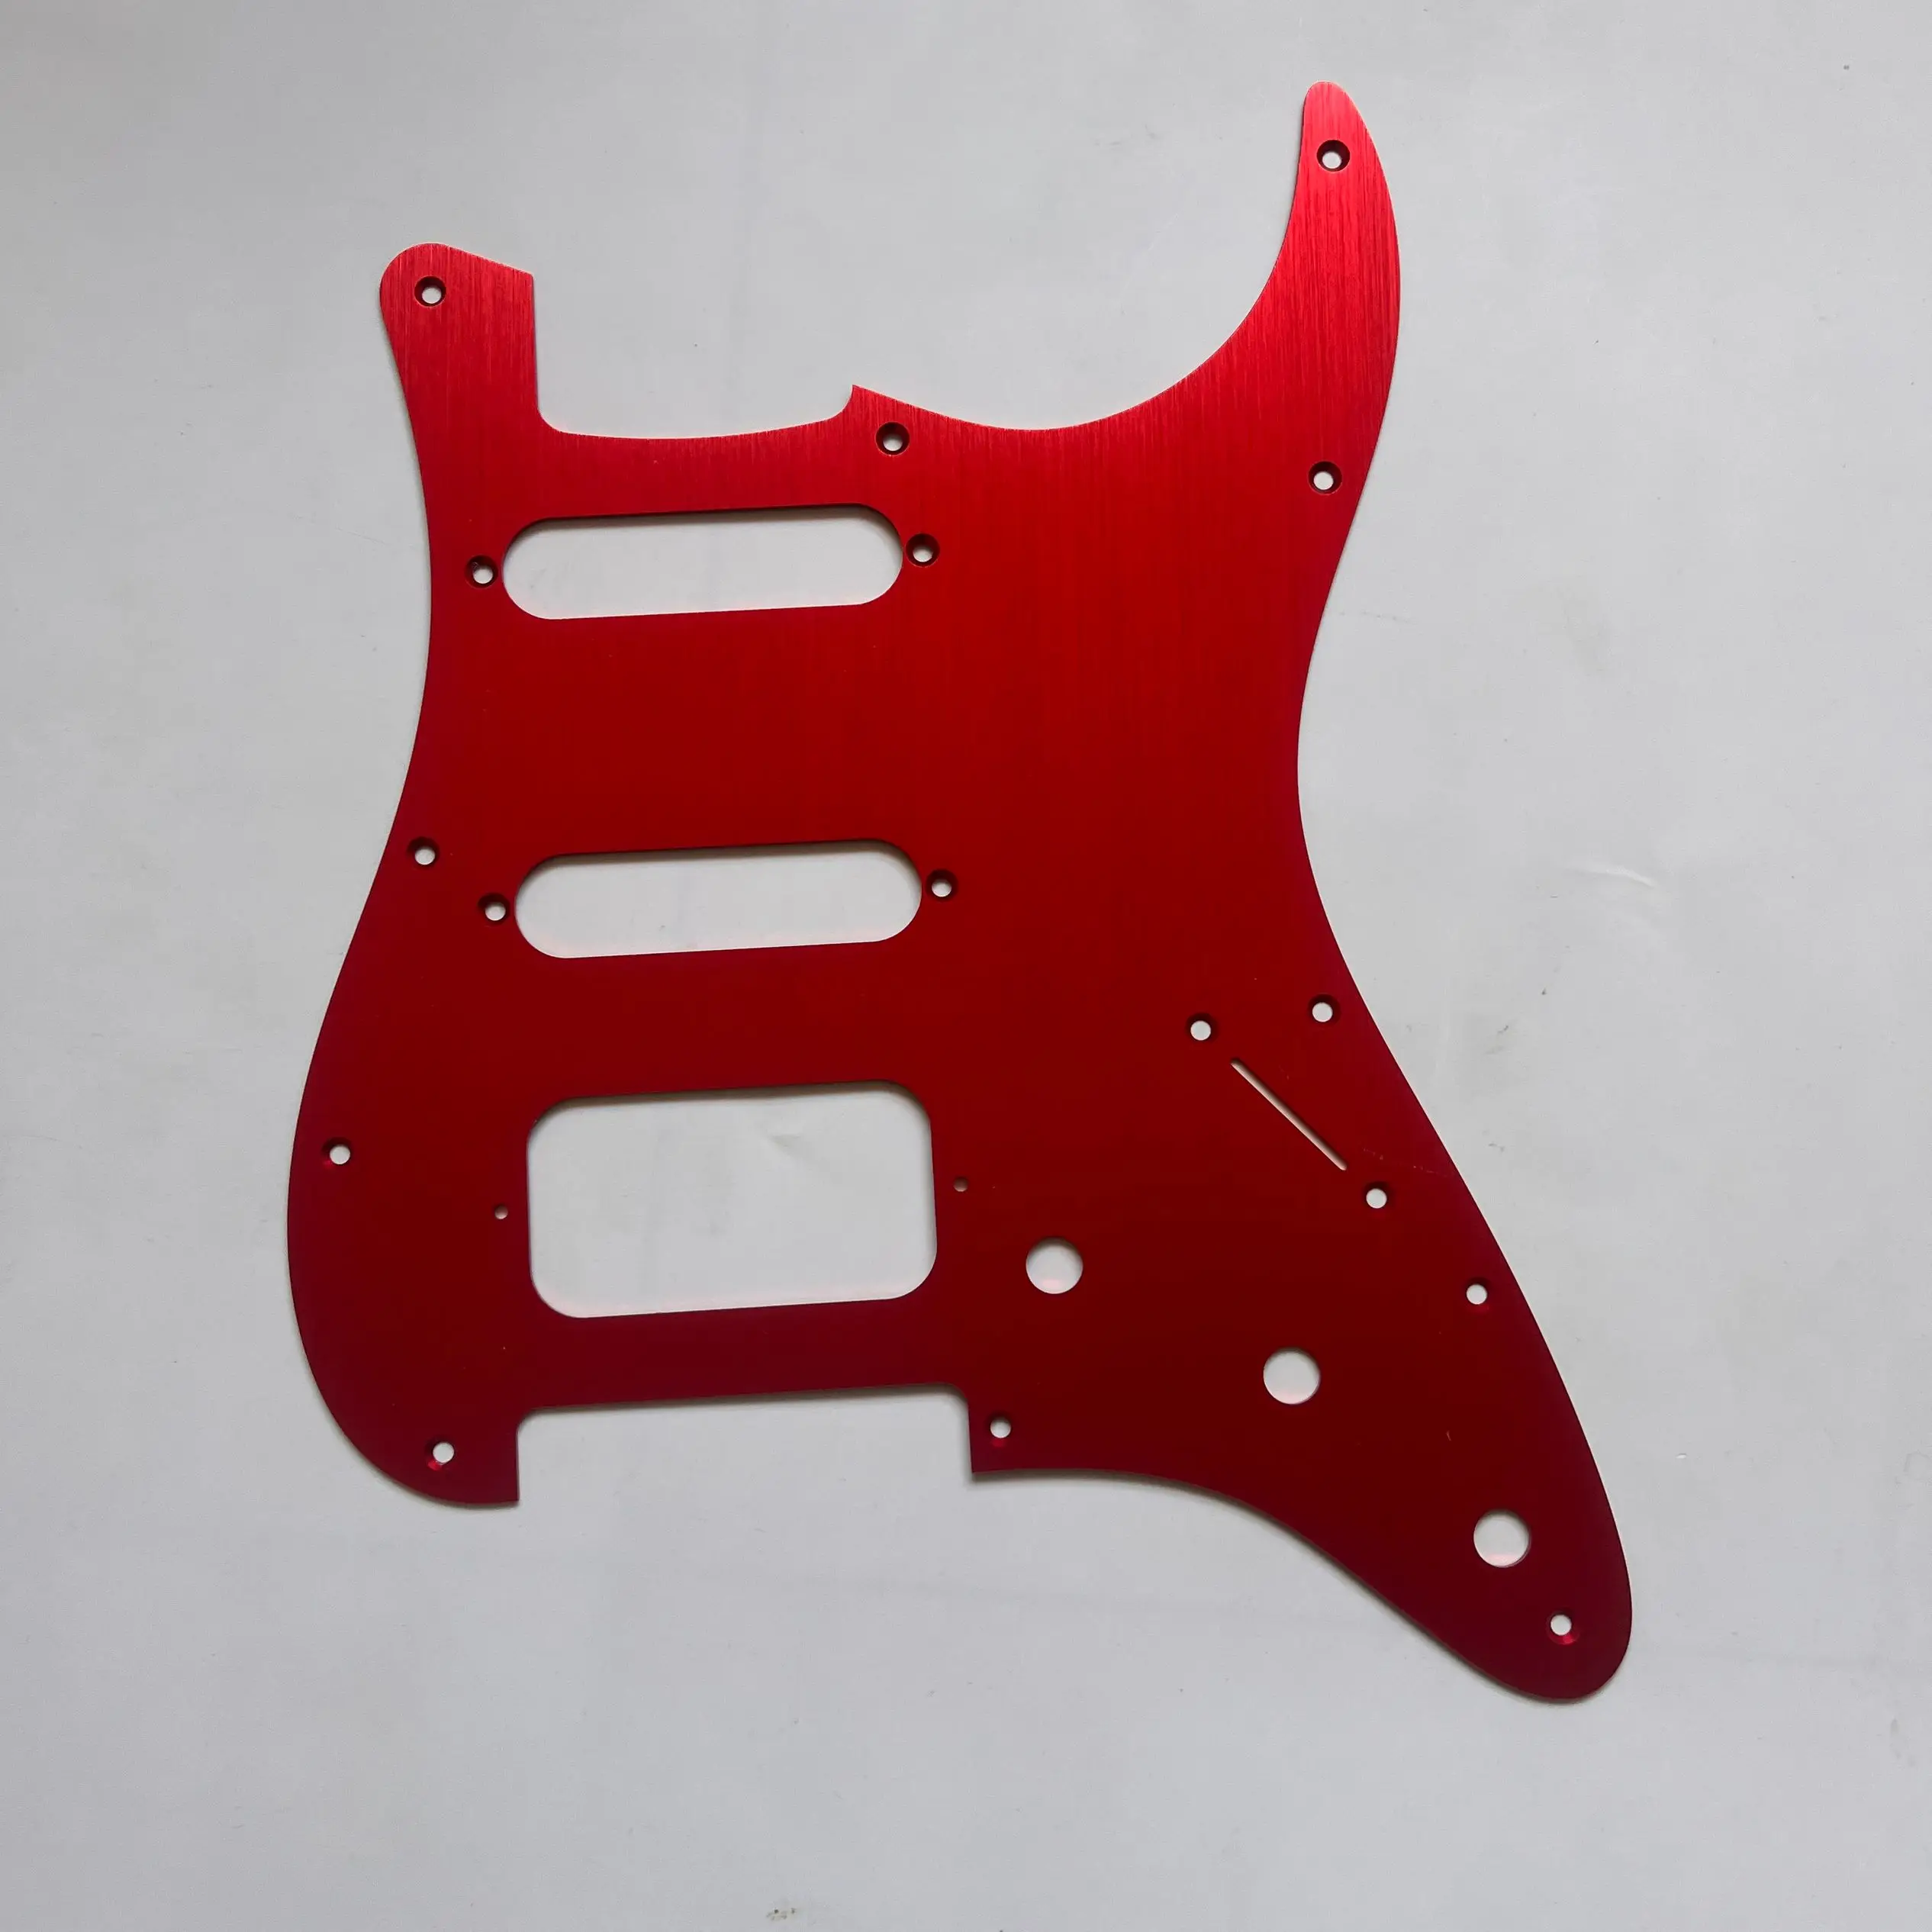 

Upgrade Electric Guitar Pickguard 1Ply Aluminum SSS Guitar Anti-Scratch Plate Pickguard Red Professional Guitar Parts